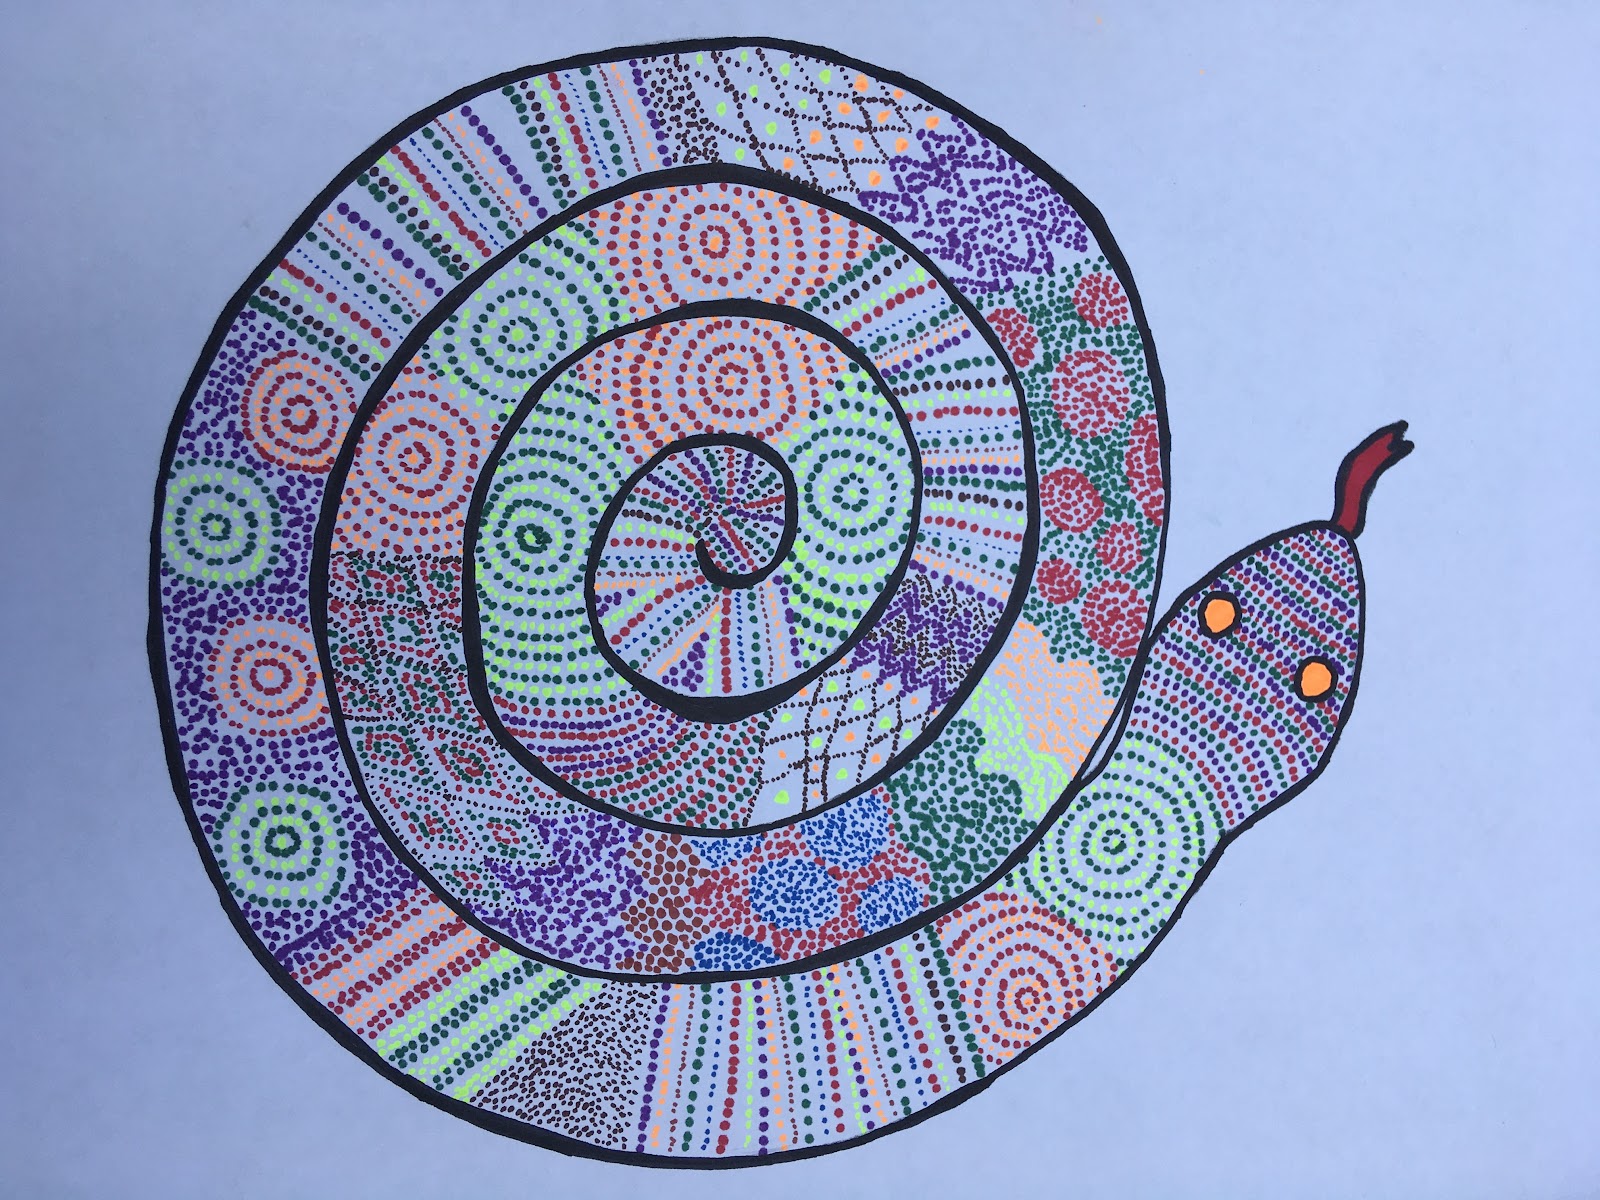 jade-s-rainbow-serpent-craft-tutorial-hillingdon-libraries-blog